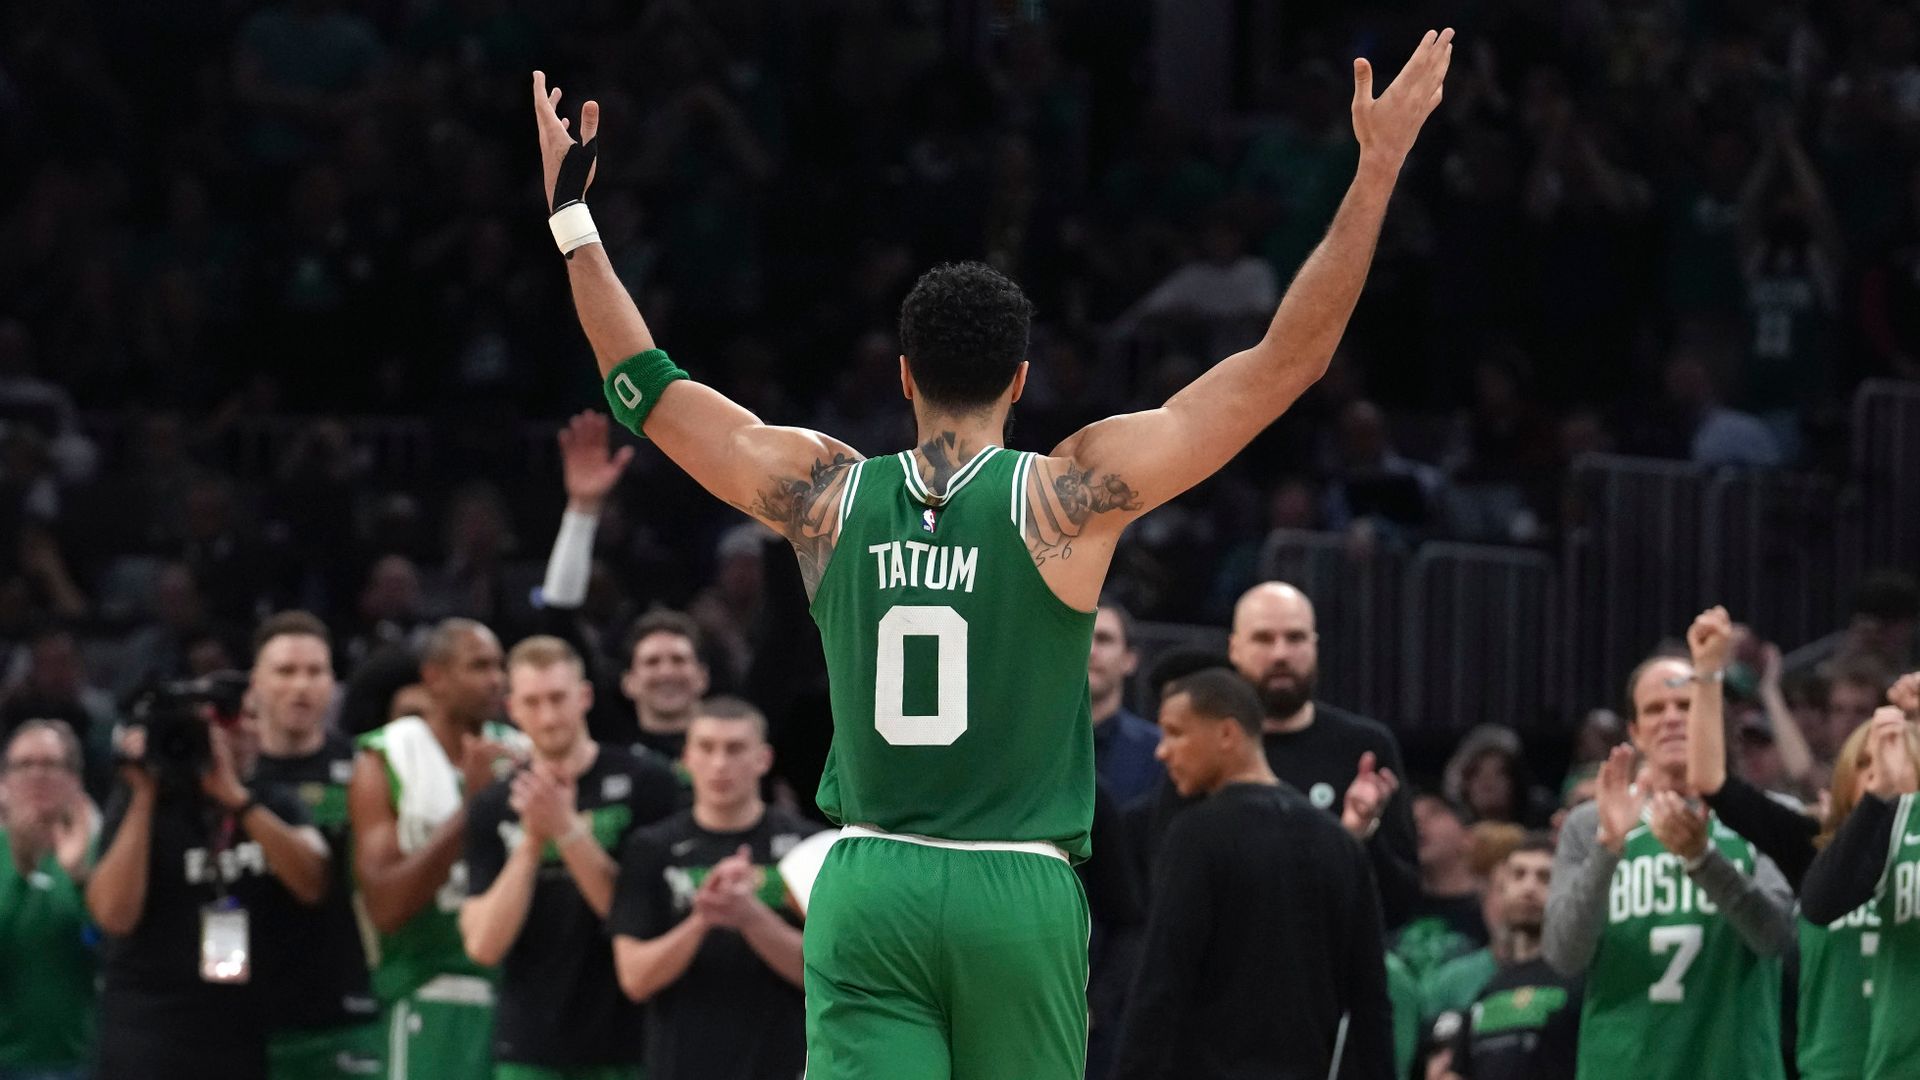 Tatum sets record as Celtics advance past 76ers